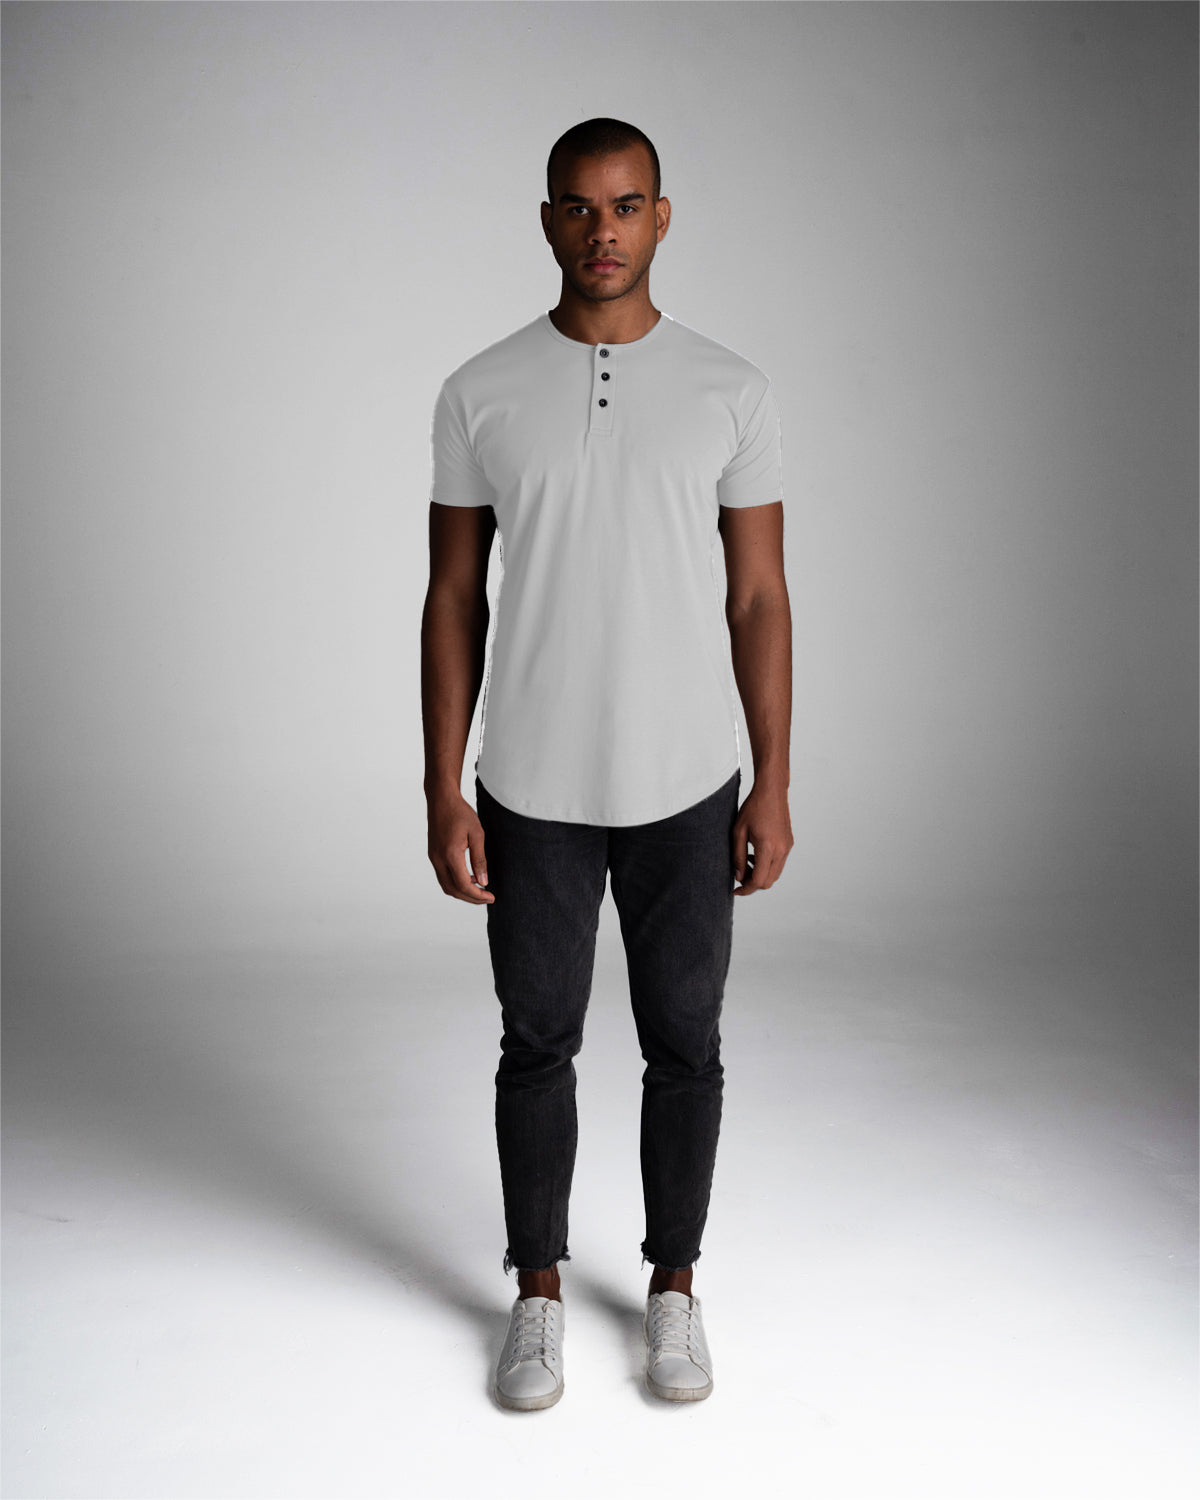 Origin Curved Henley T-Shirt: White